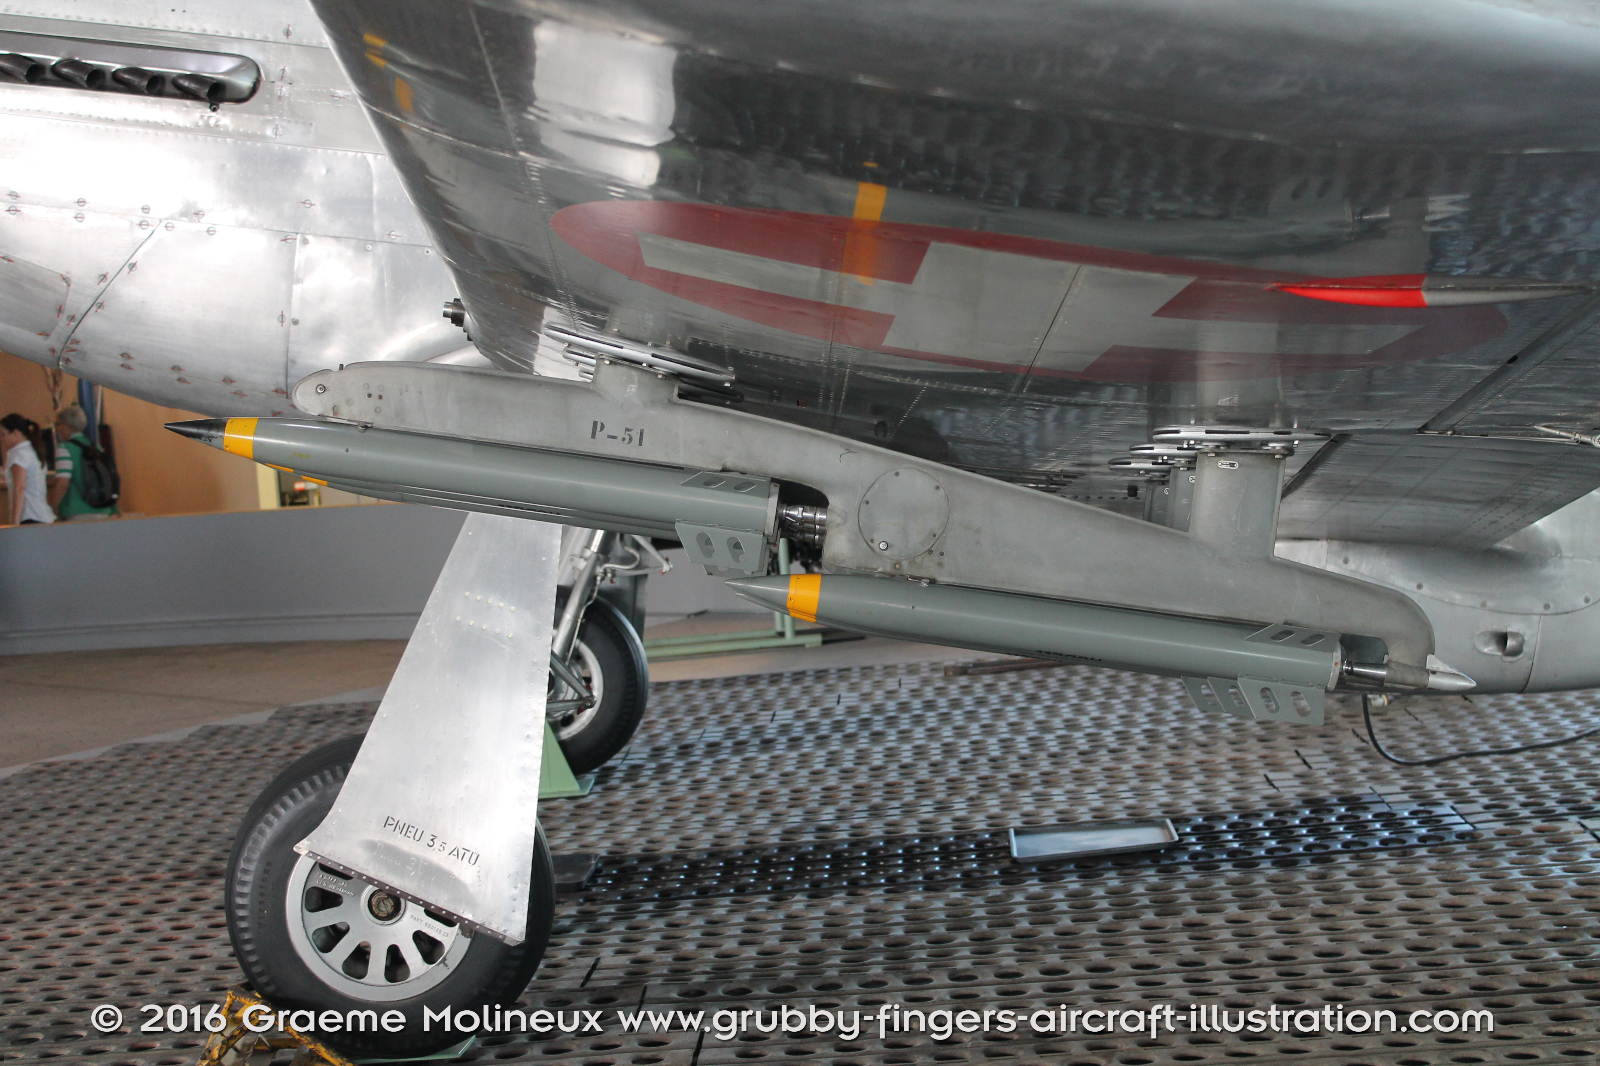 NORTH_AMERICAN_P-51D_Mustang_Walkaround_J-2113_Swiss_Air_Force_Museum_2015_15_GrubbyFingers